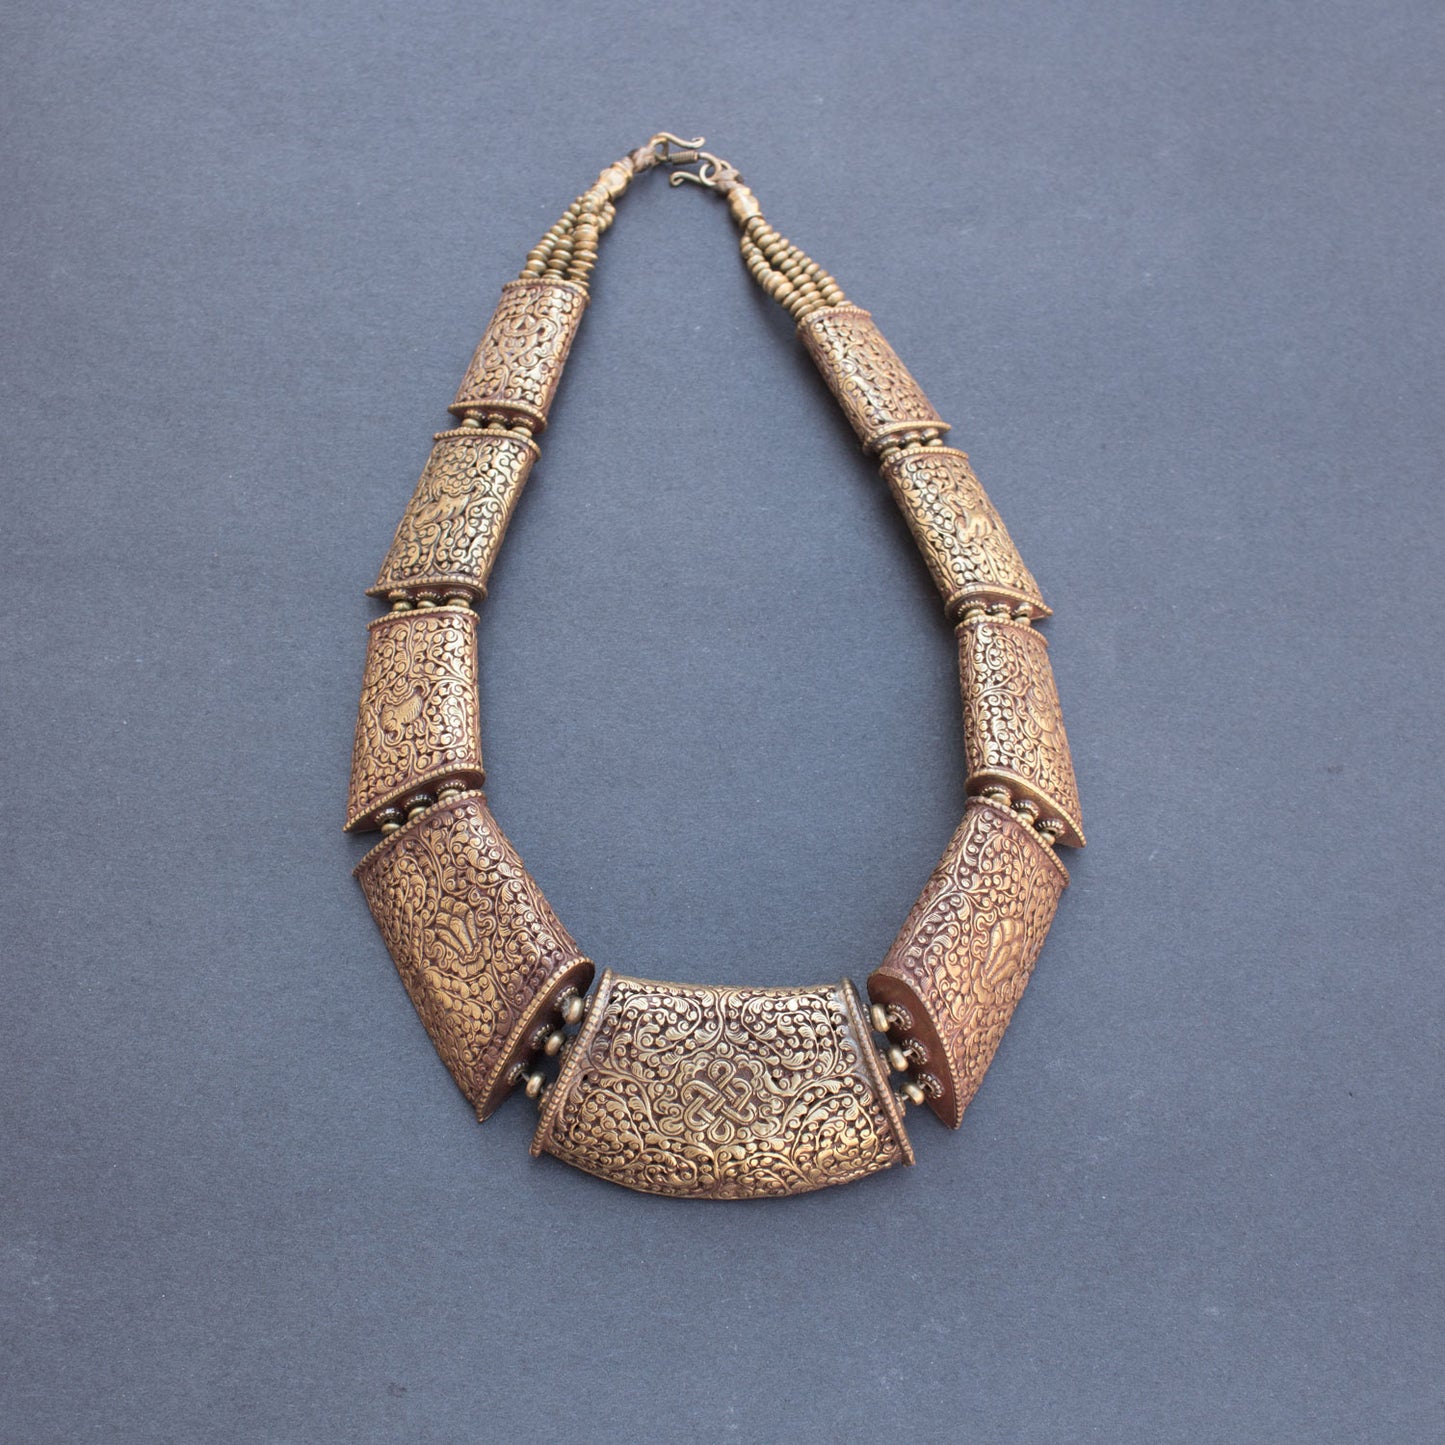 Tibetan carving necklace